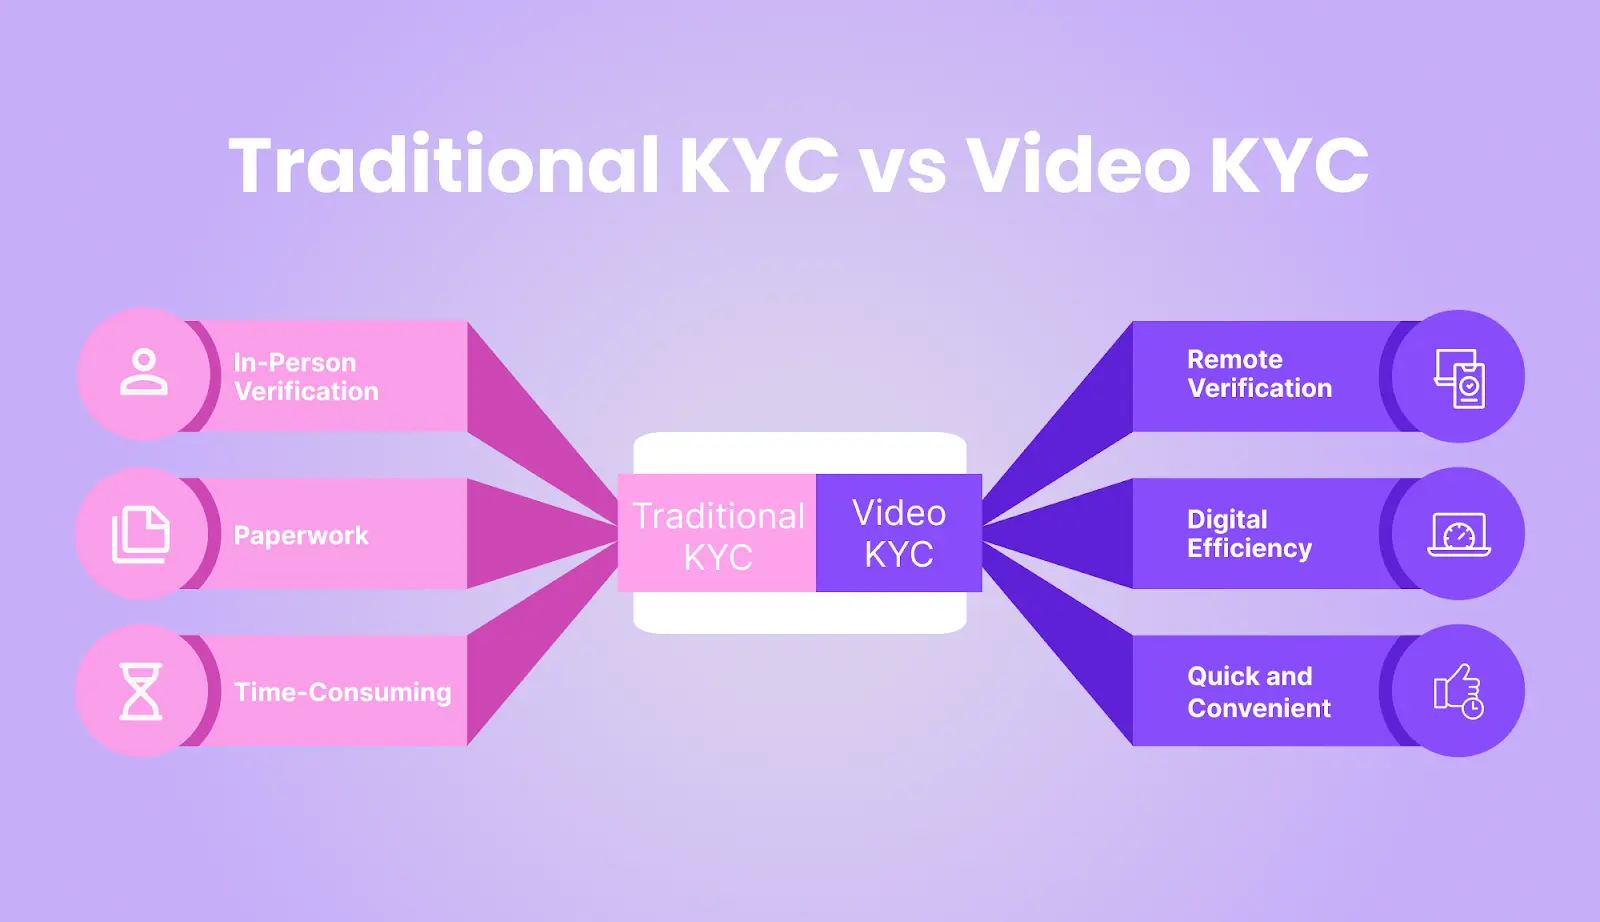 Traditional KYC vs Video KYC